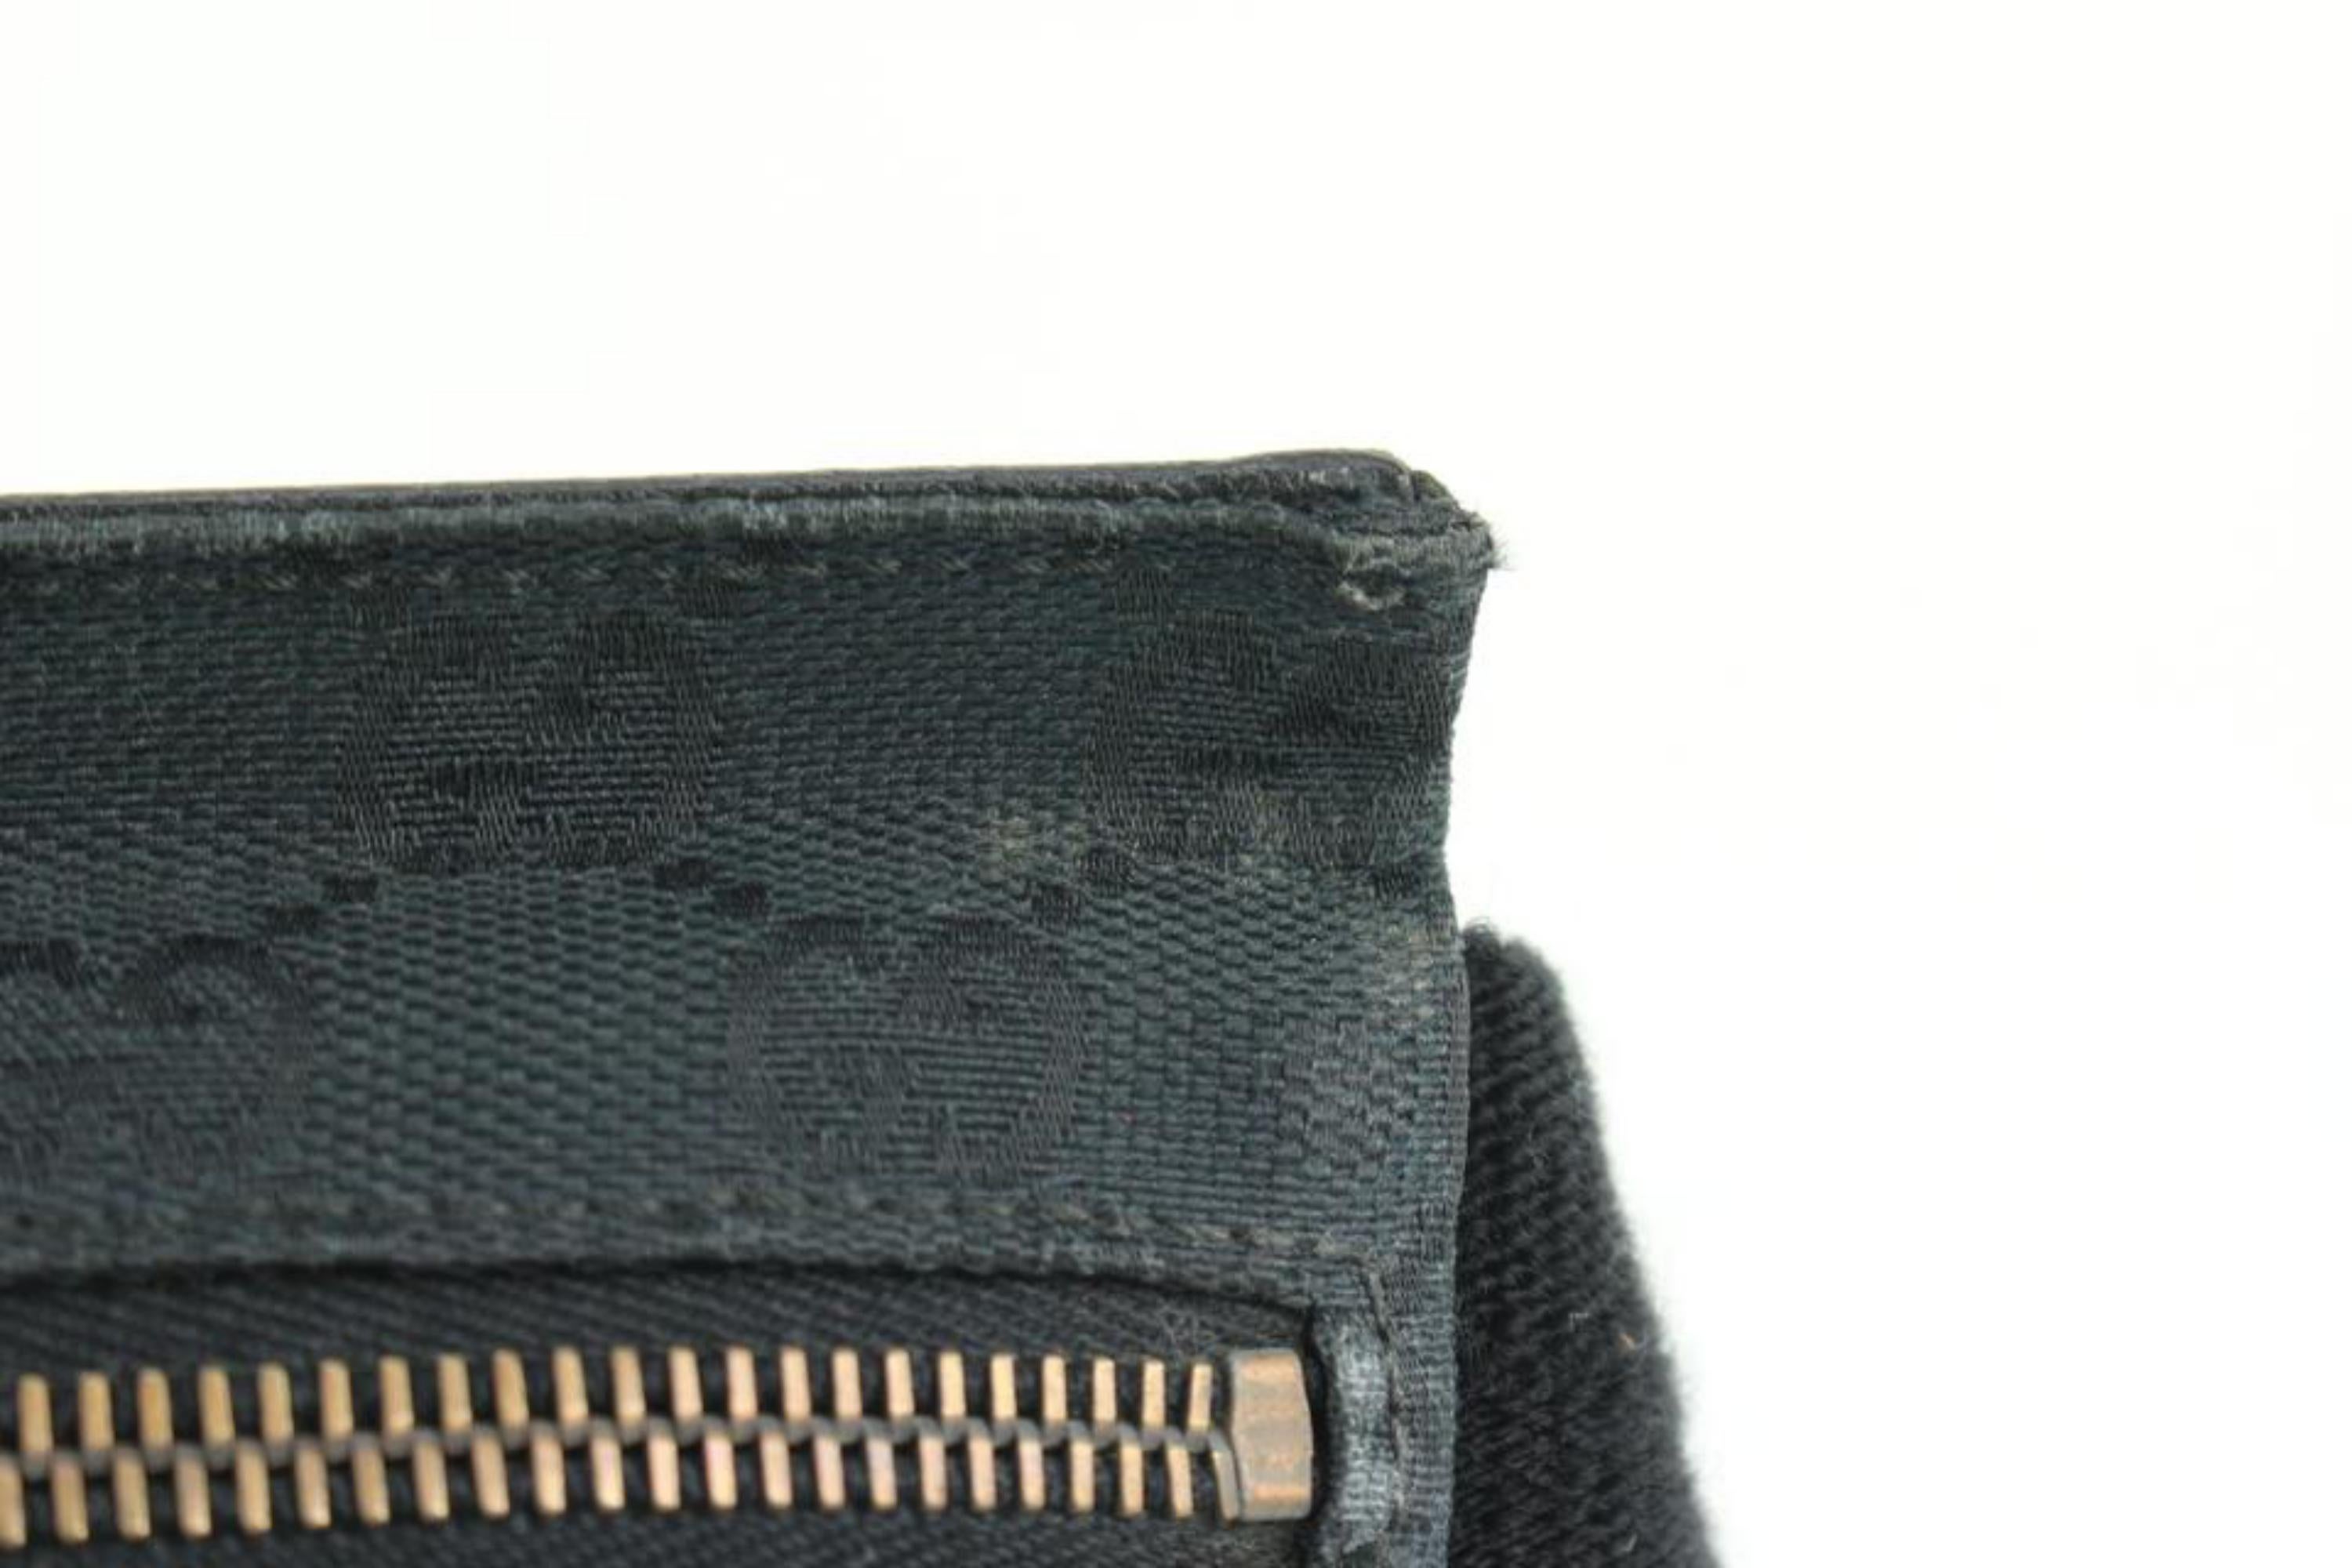 Gucci Black Monogram GG Belt Bag Fanny Pack Waist Pouch 16g29 For Sale 6